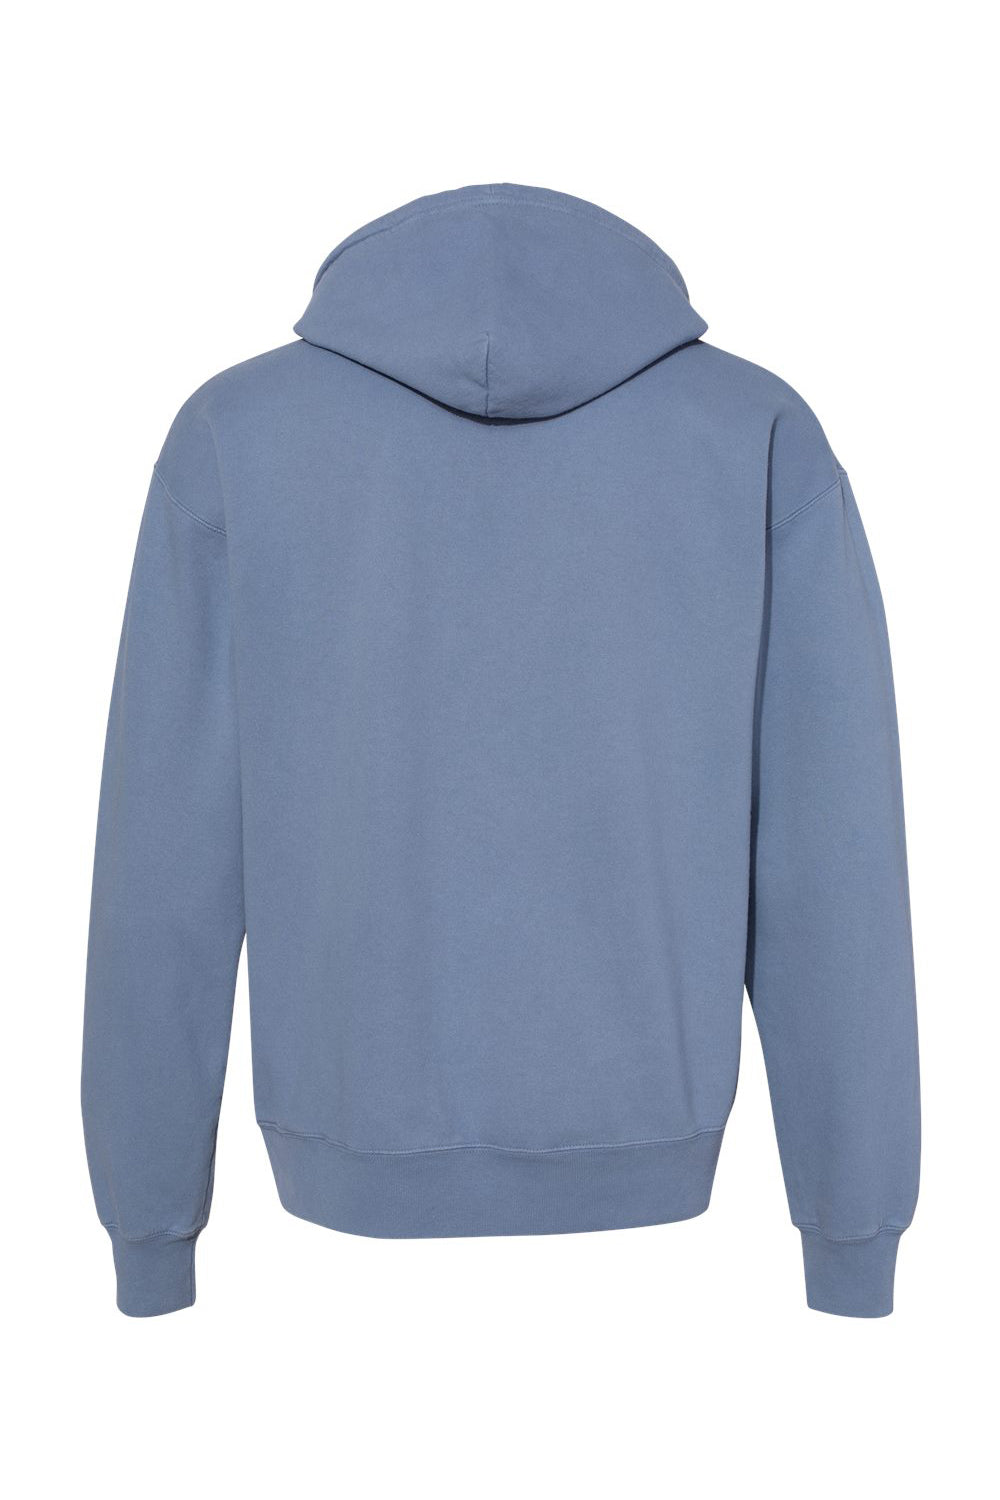 Champion CD450 Mens Garment Dyed Hooded Sweatshirt Hoodie Saltwater Blue Flat Back